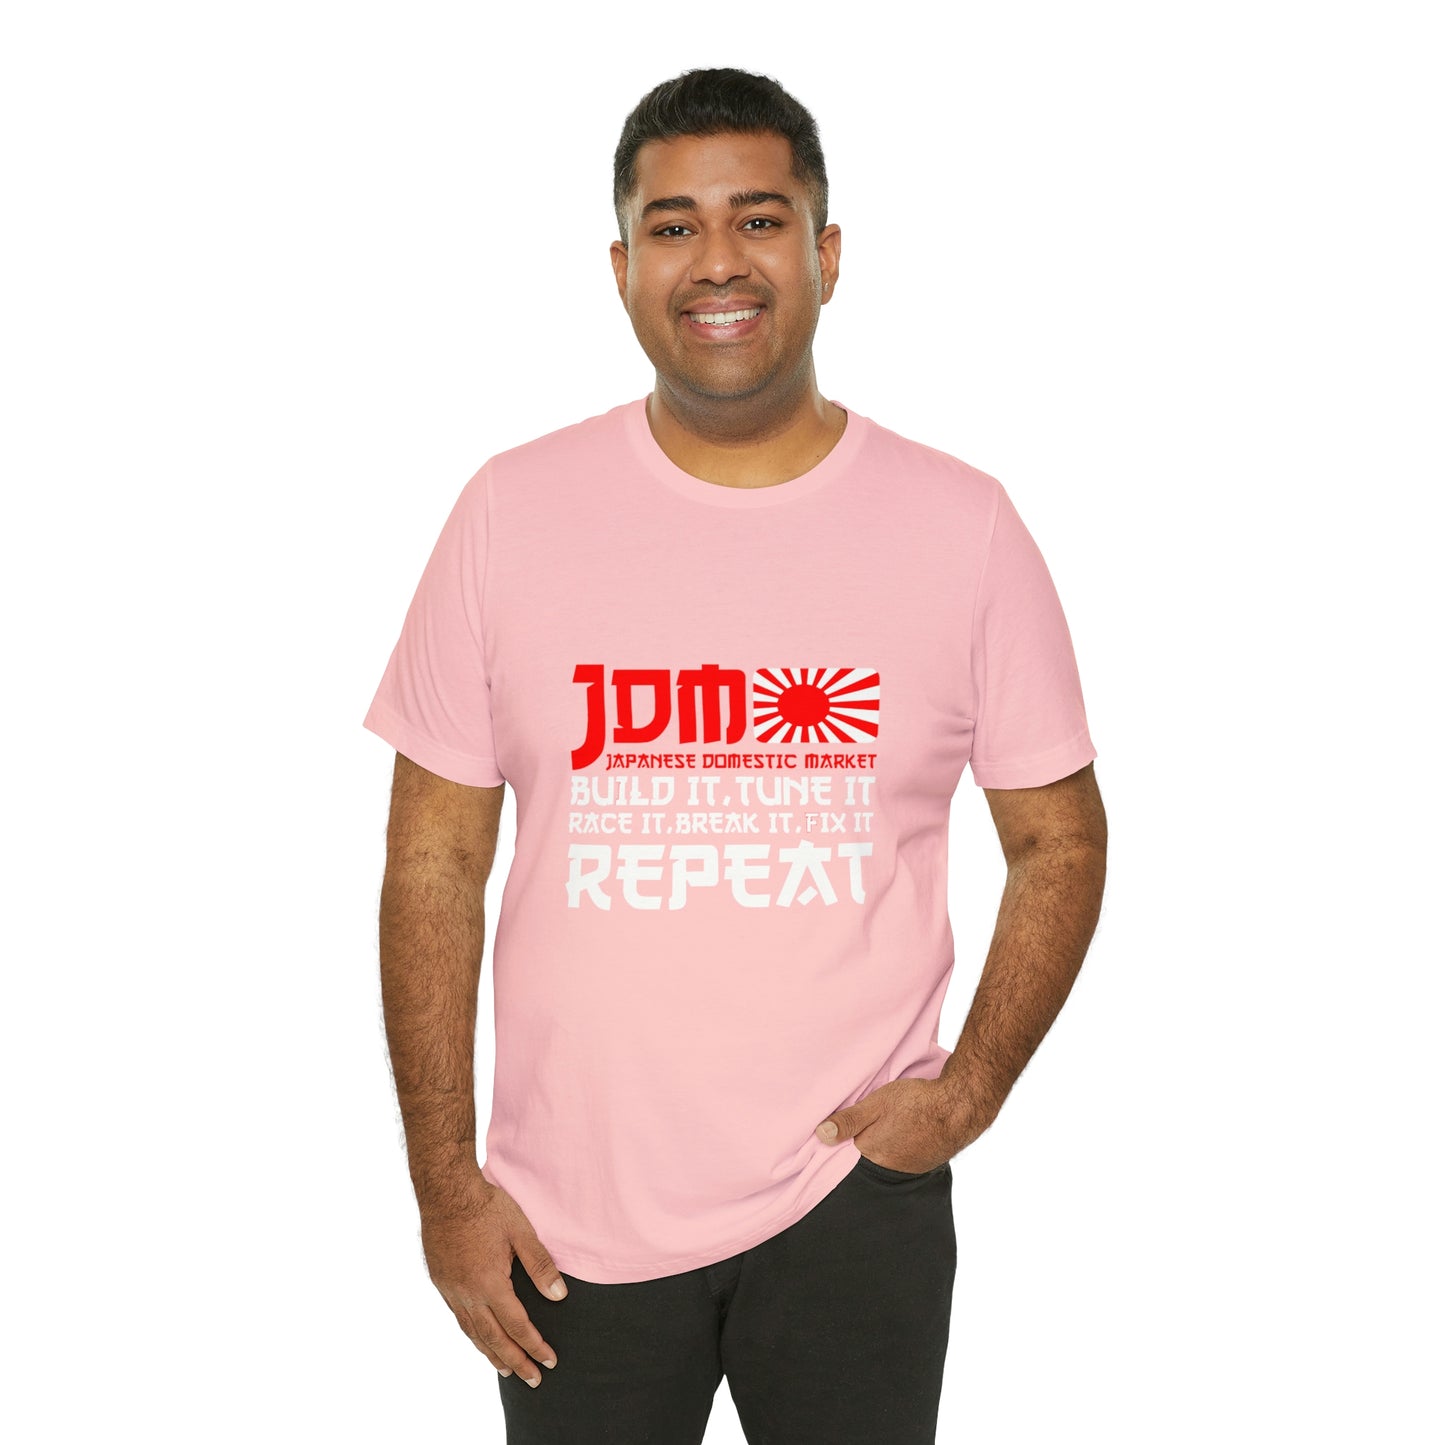 JDM Car Inspired T Shirt 61.